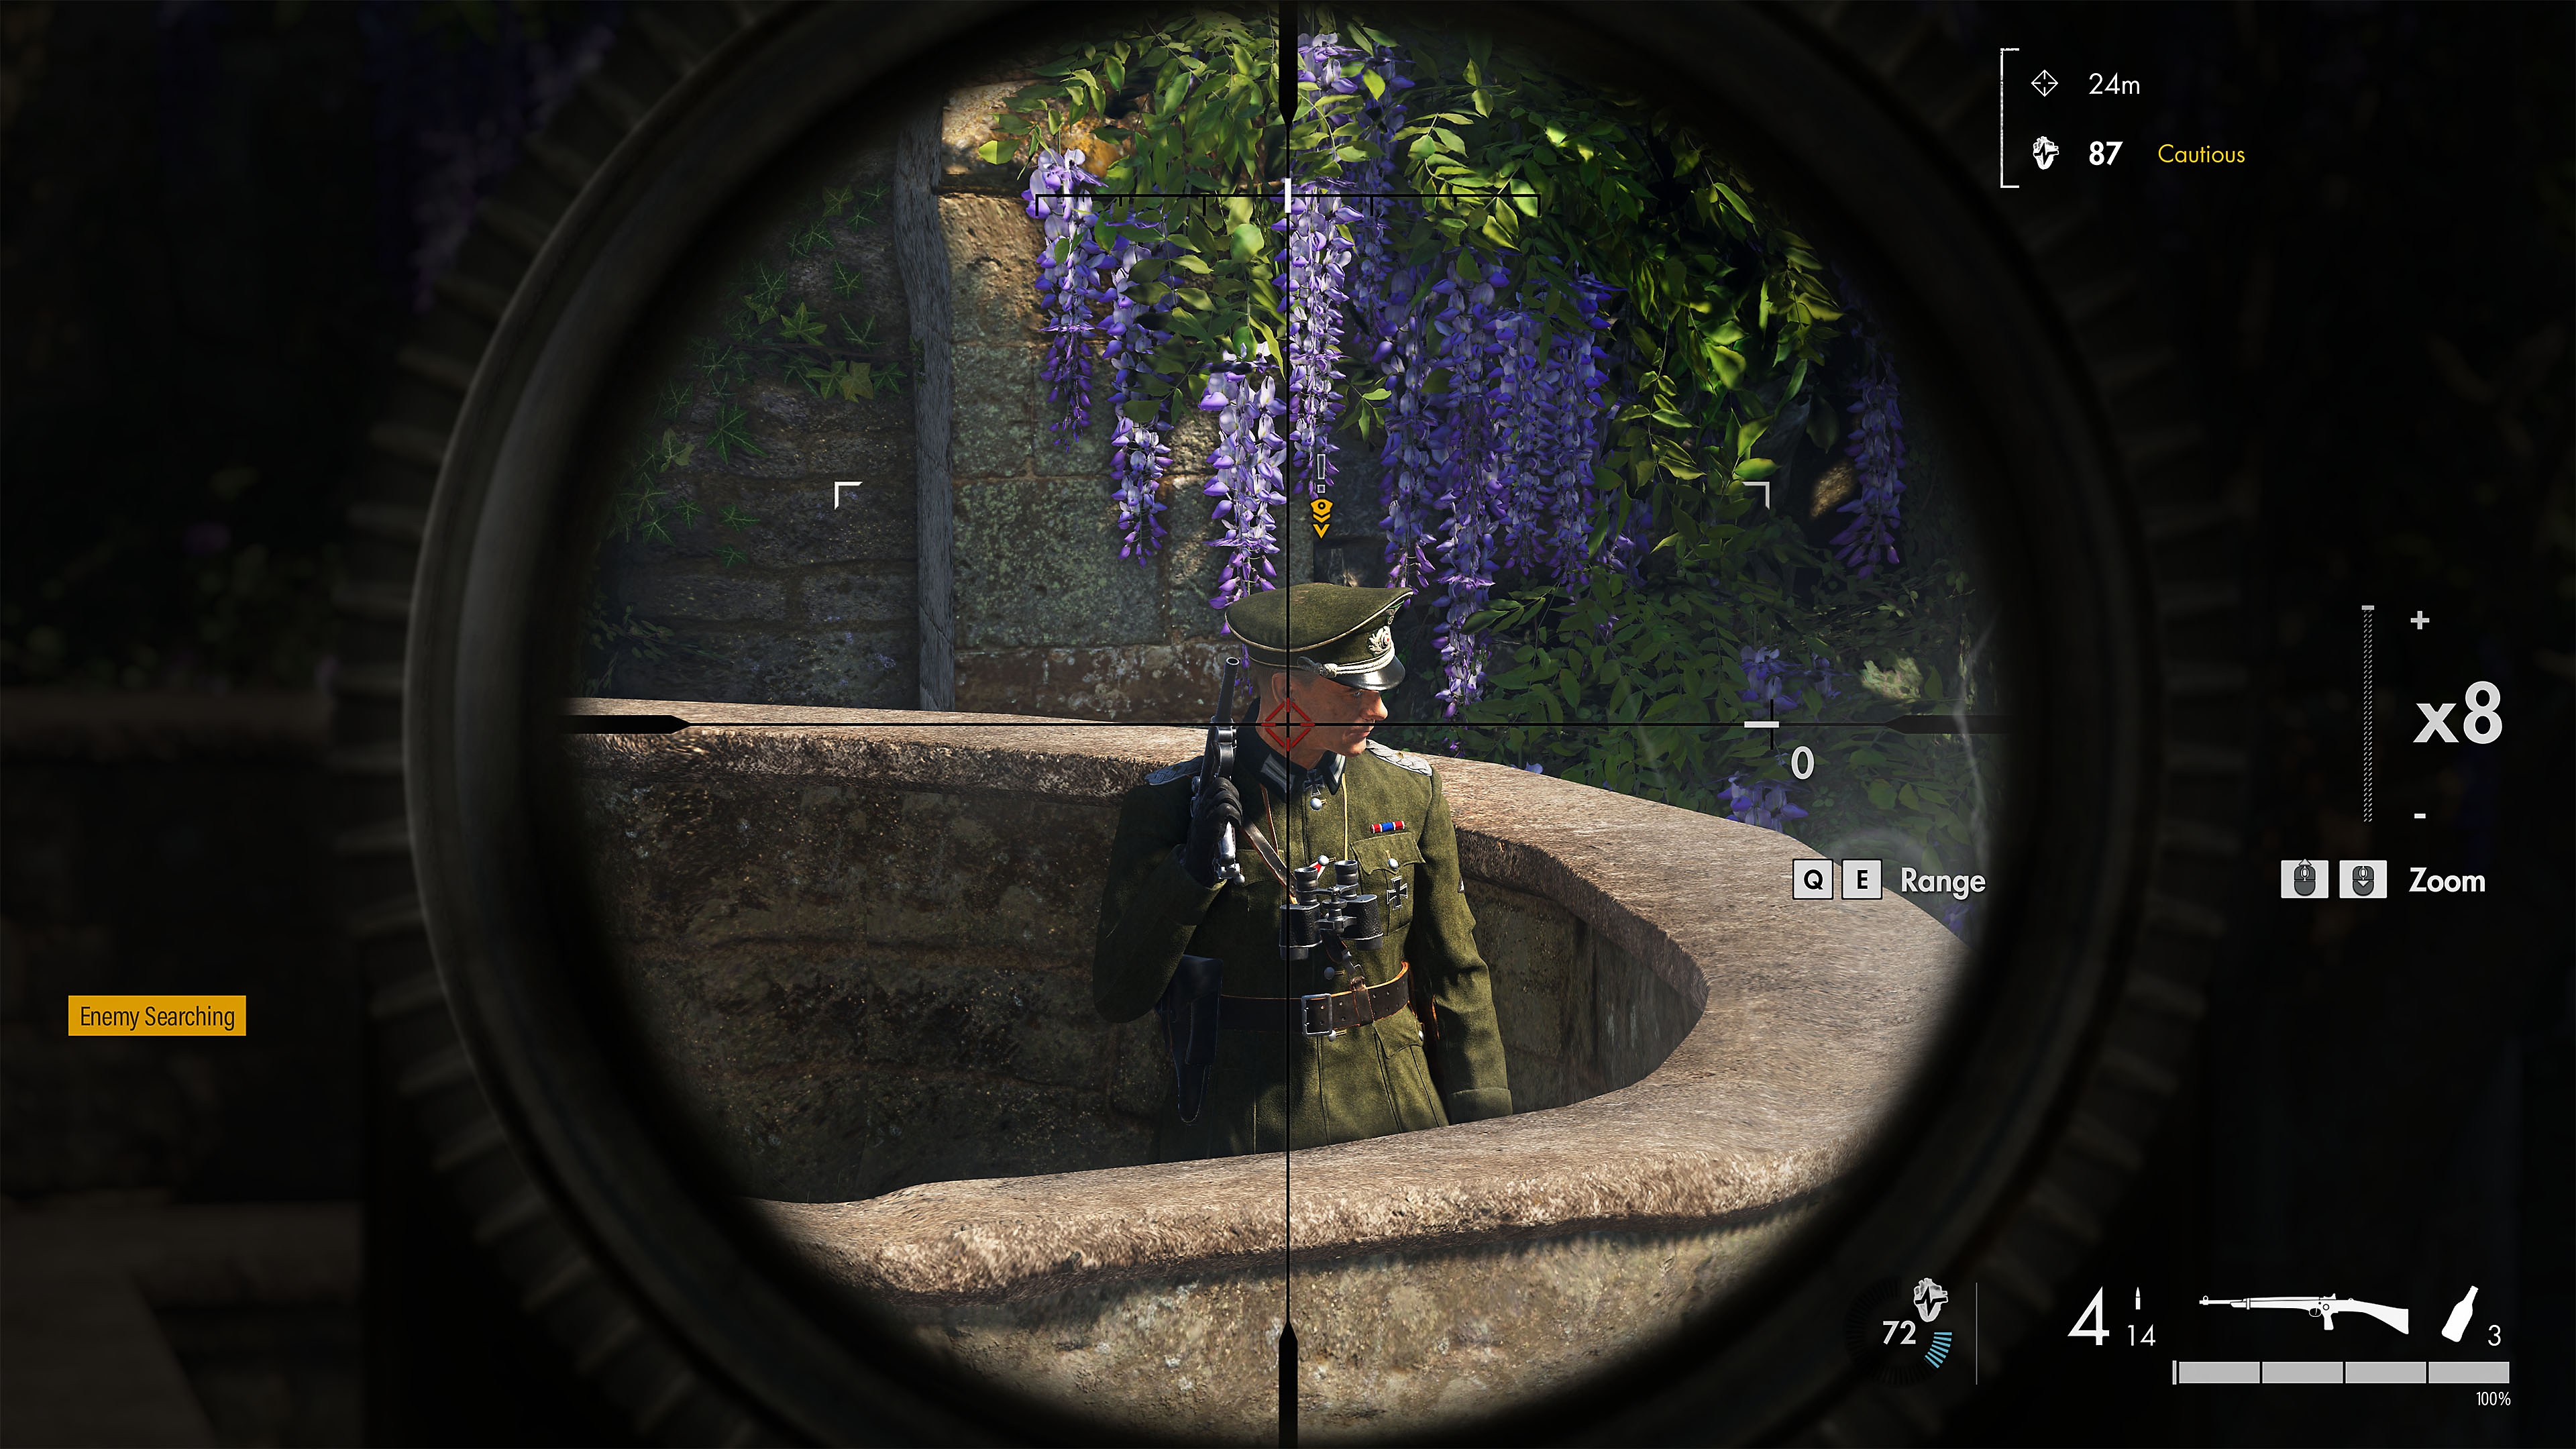 《Sniper Elite 5》螢幕截圖，顯示一名敵人位於狙擊鏡的十字瞄準線內